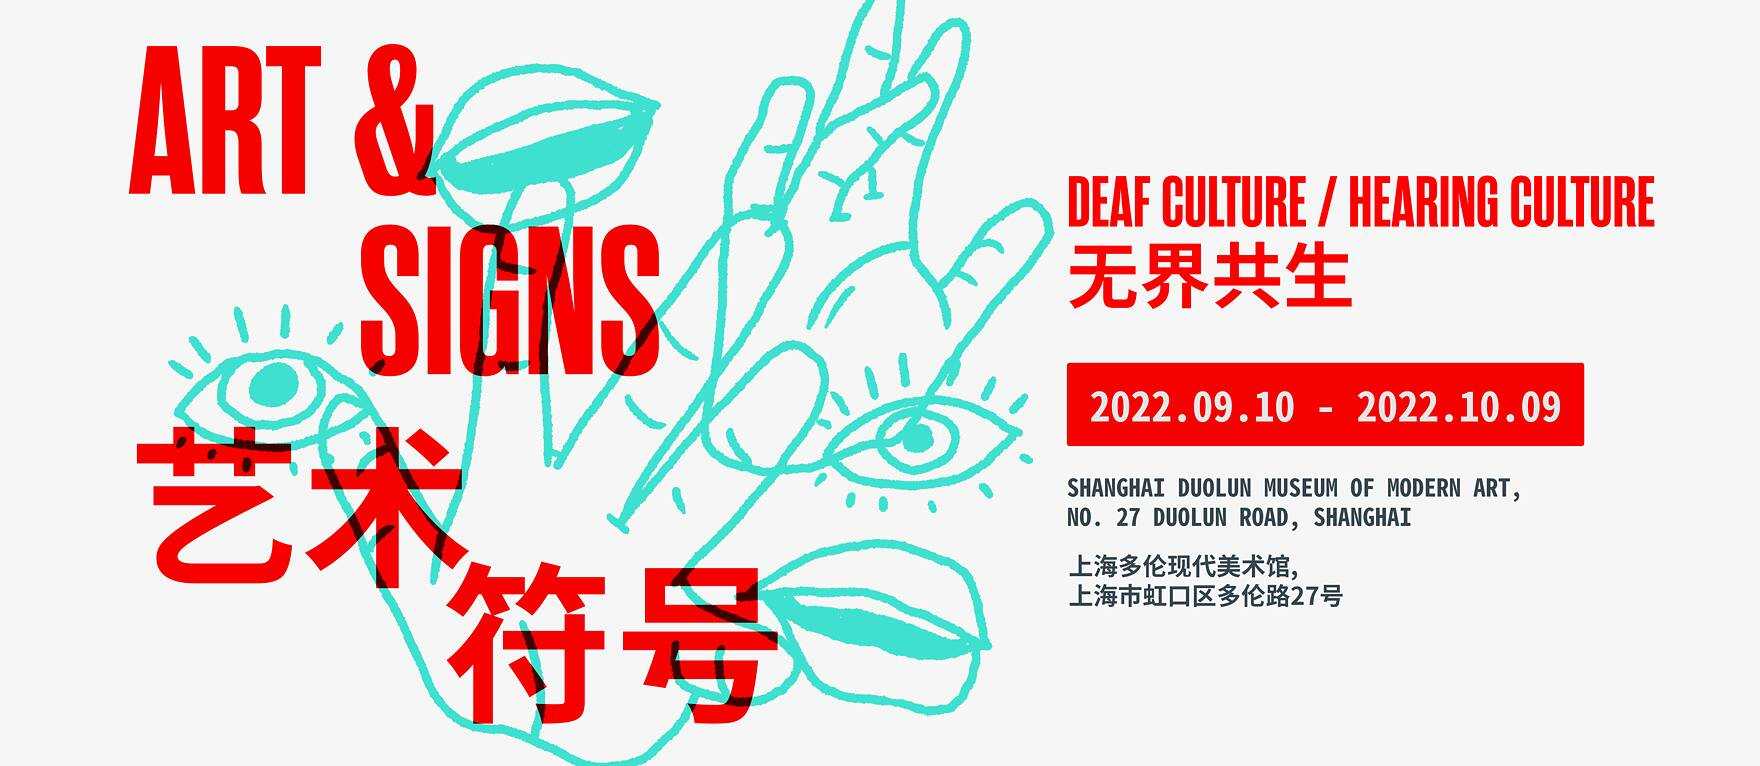 Art and Signs. Deaf Culture / Hearing Culture